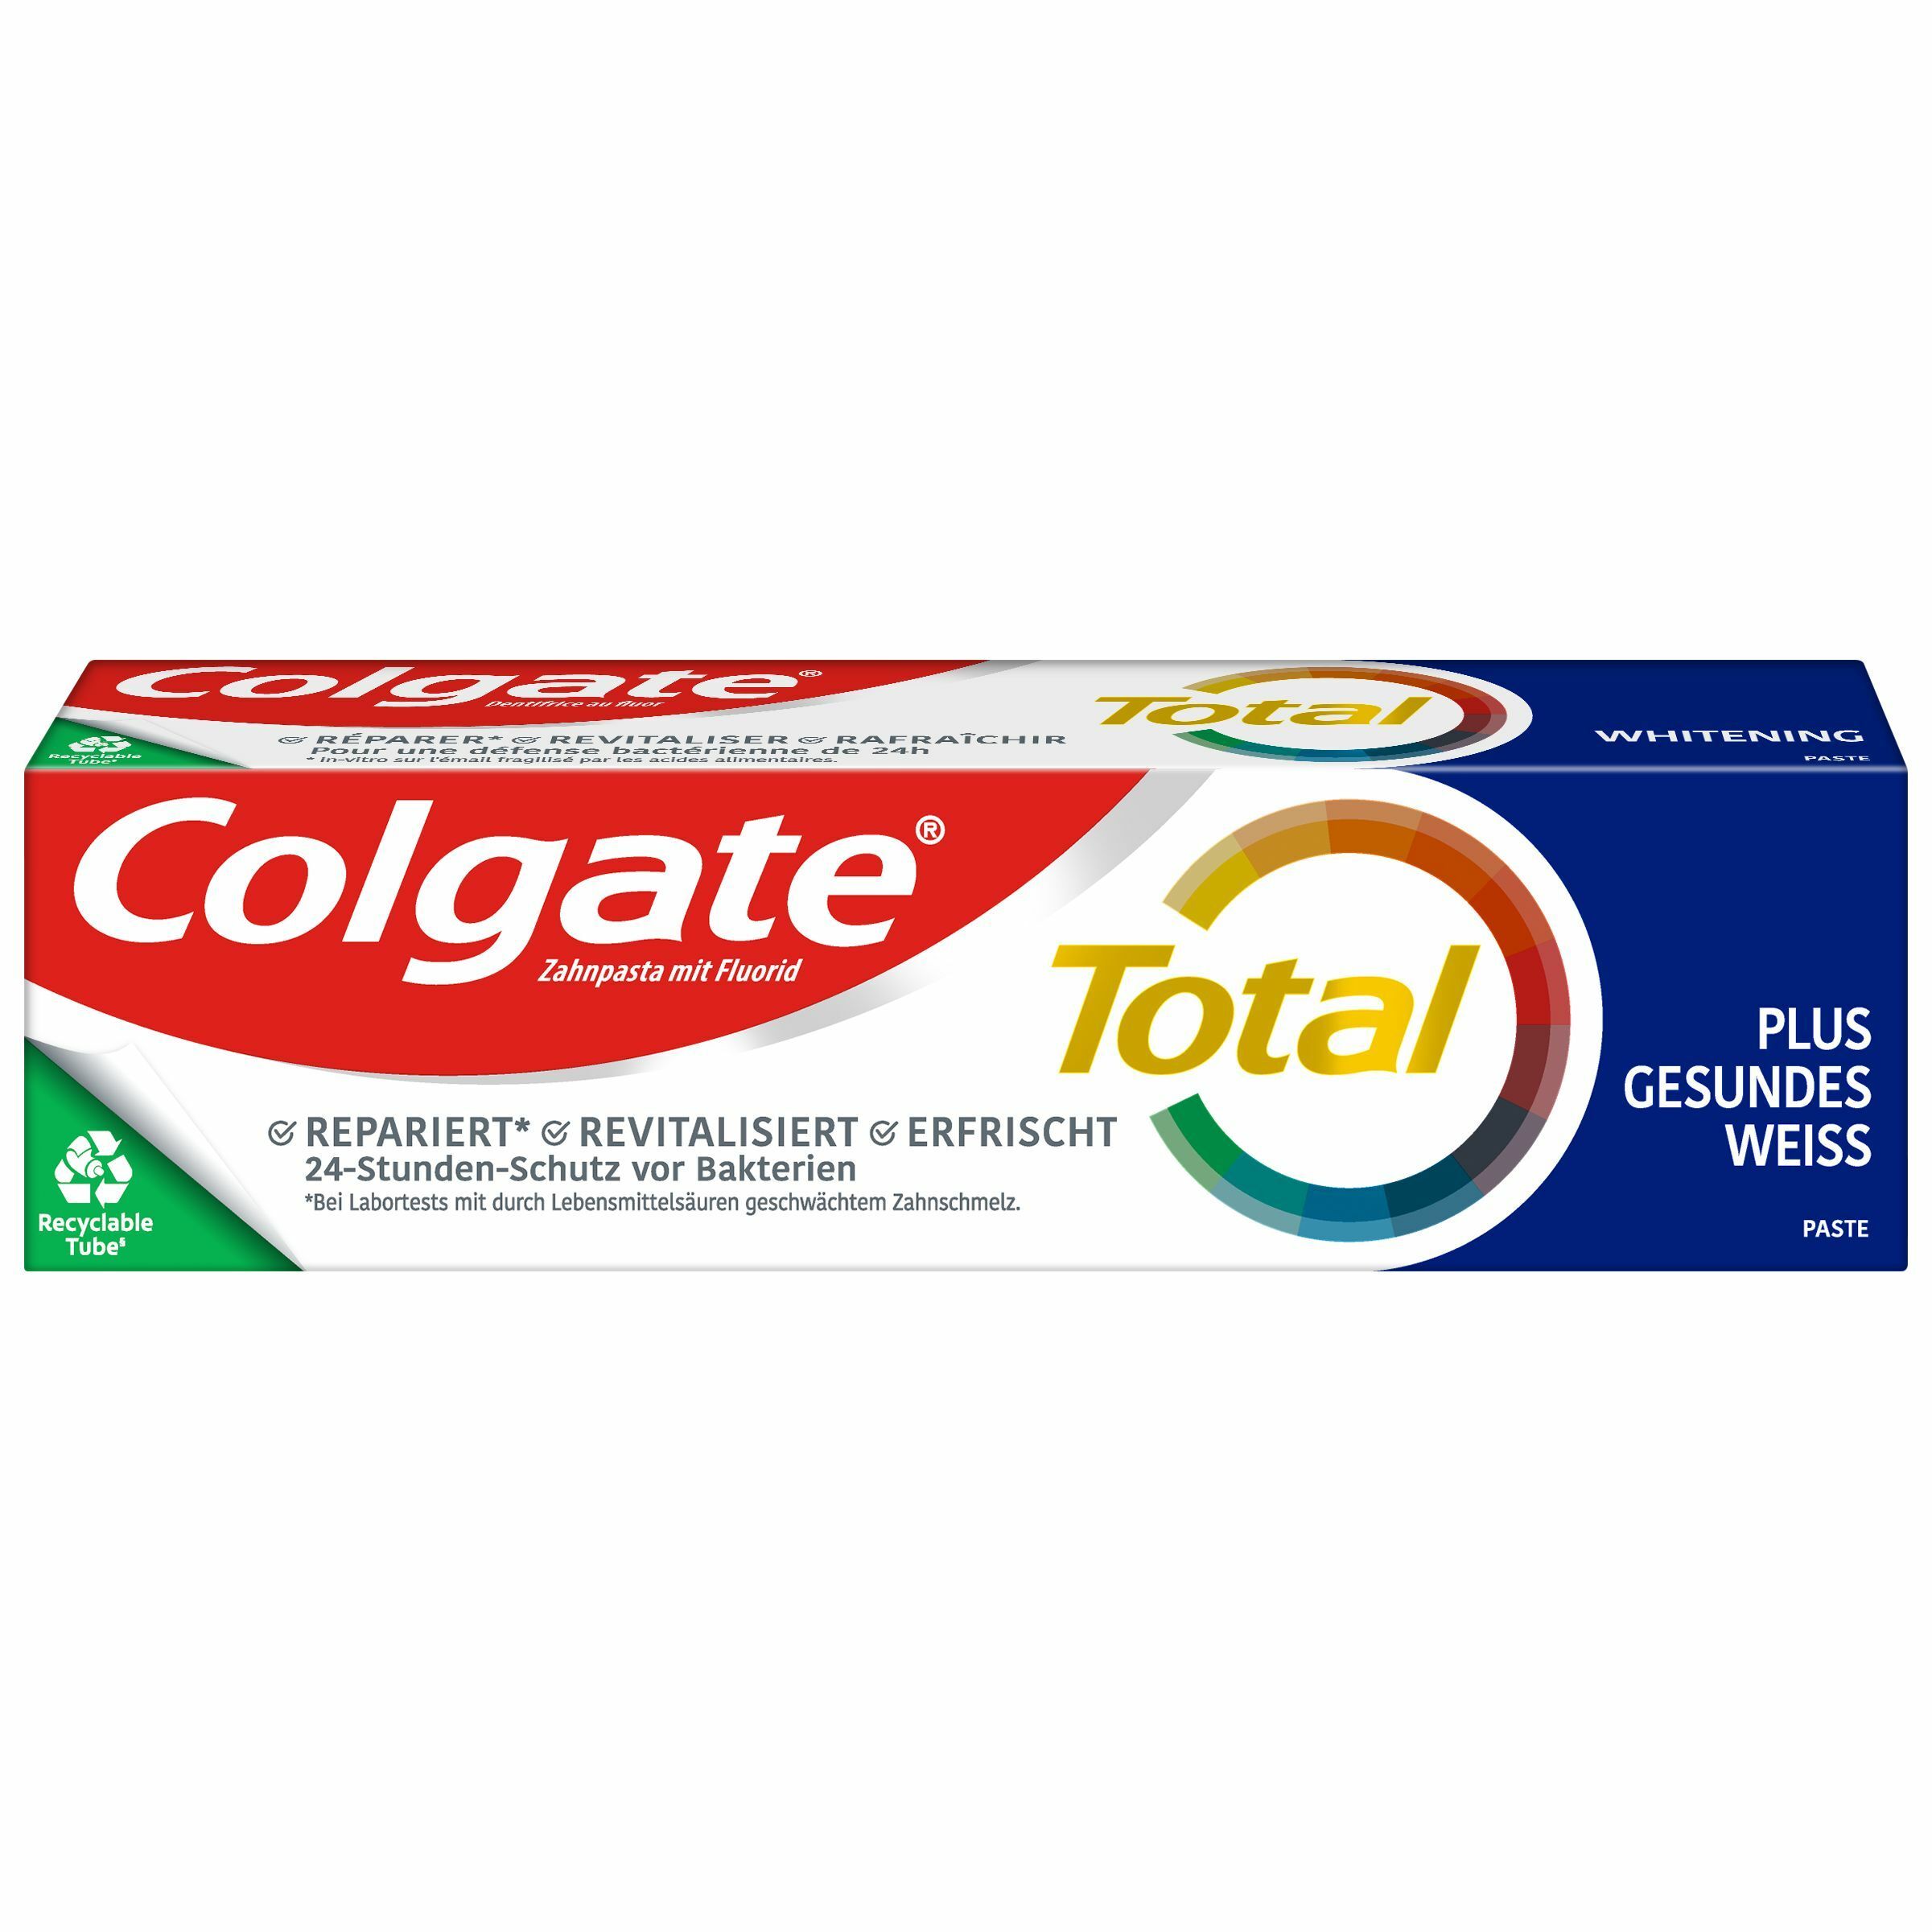 Colgate Total Plus gesundes weiss Zahncreme